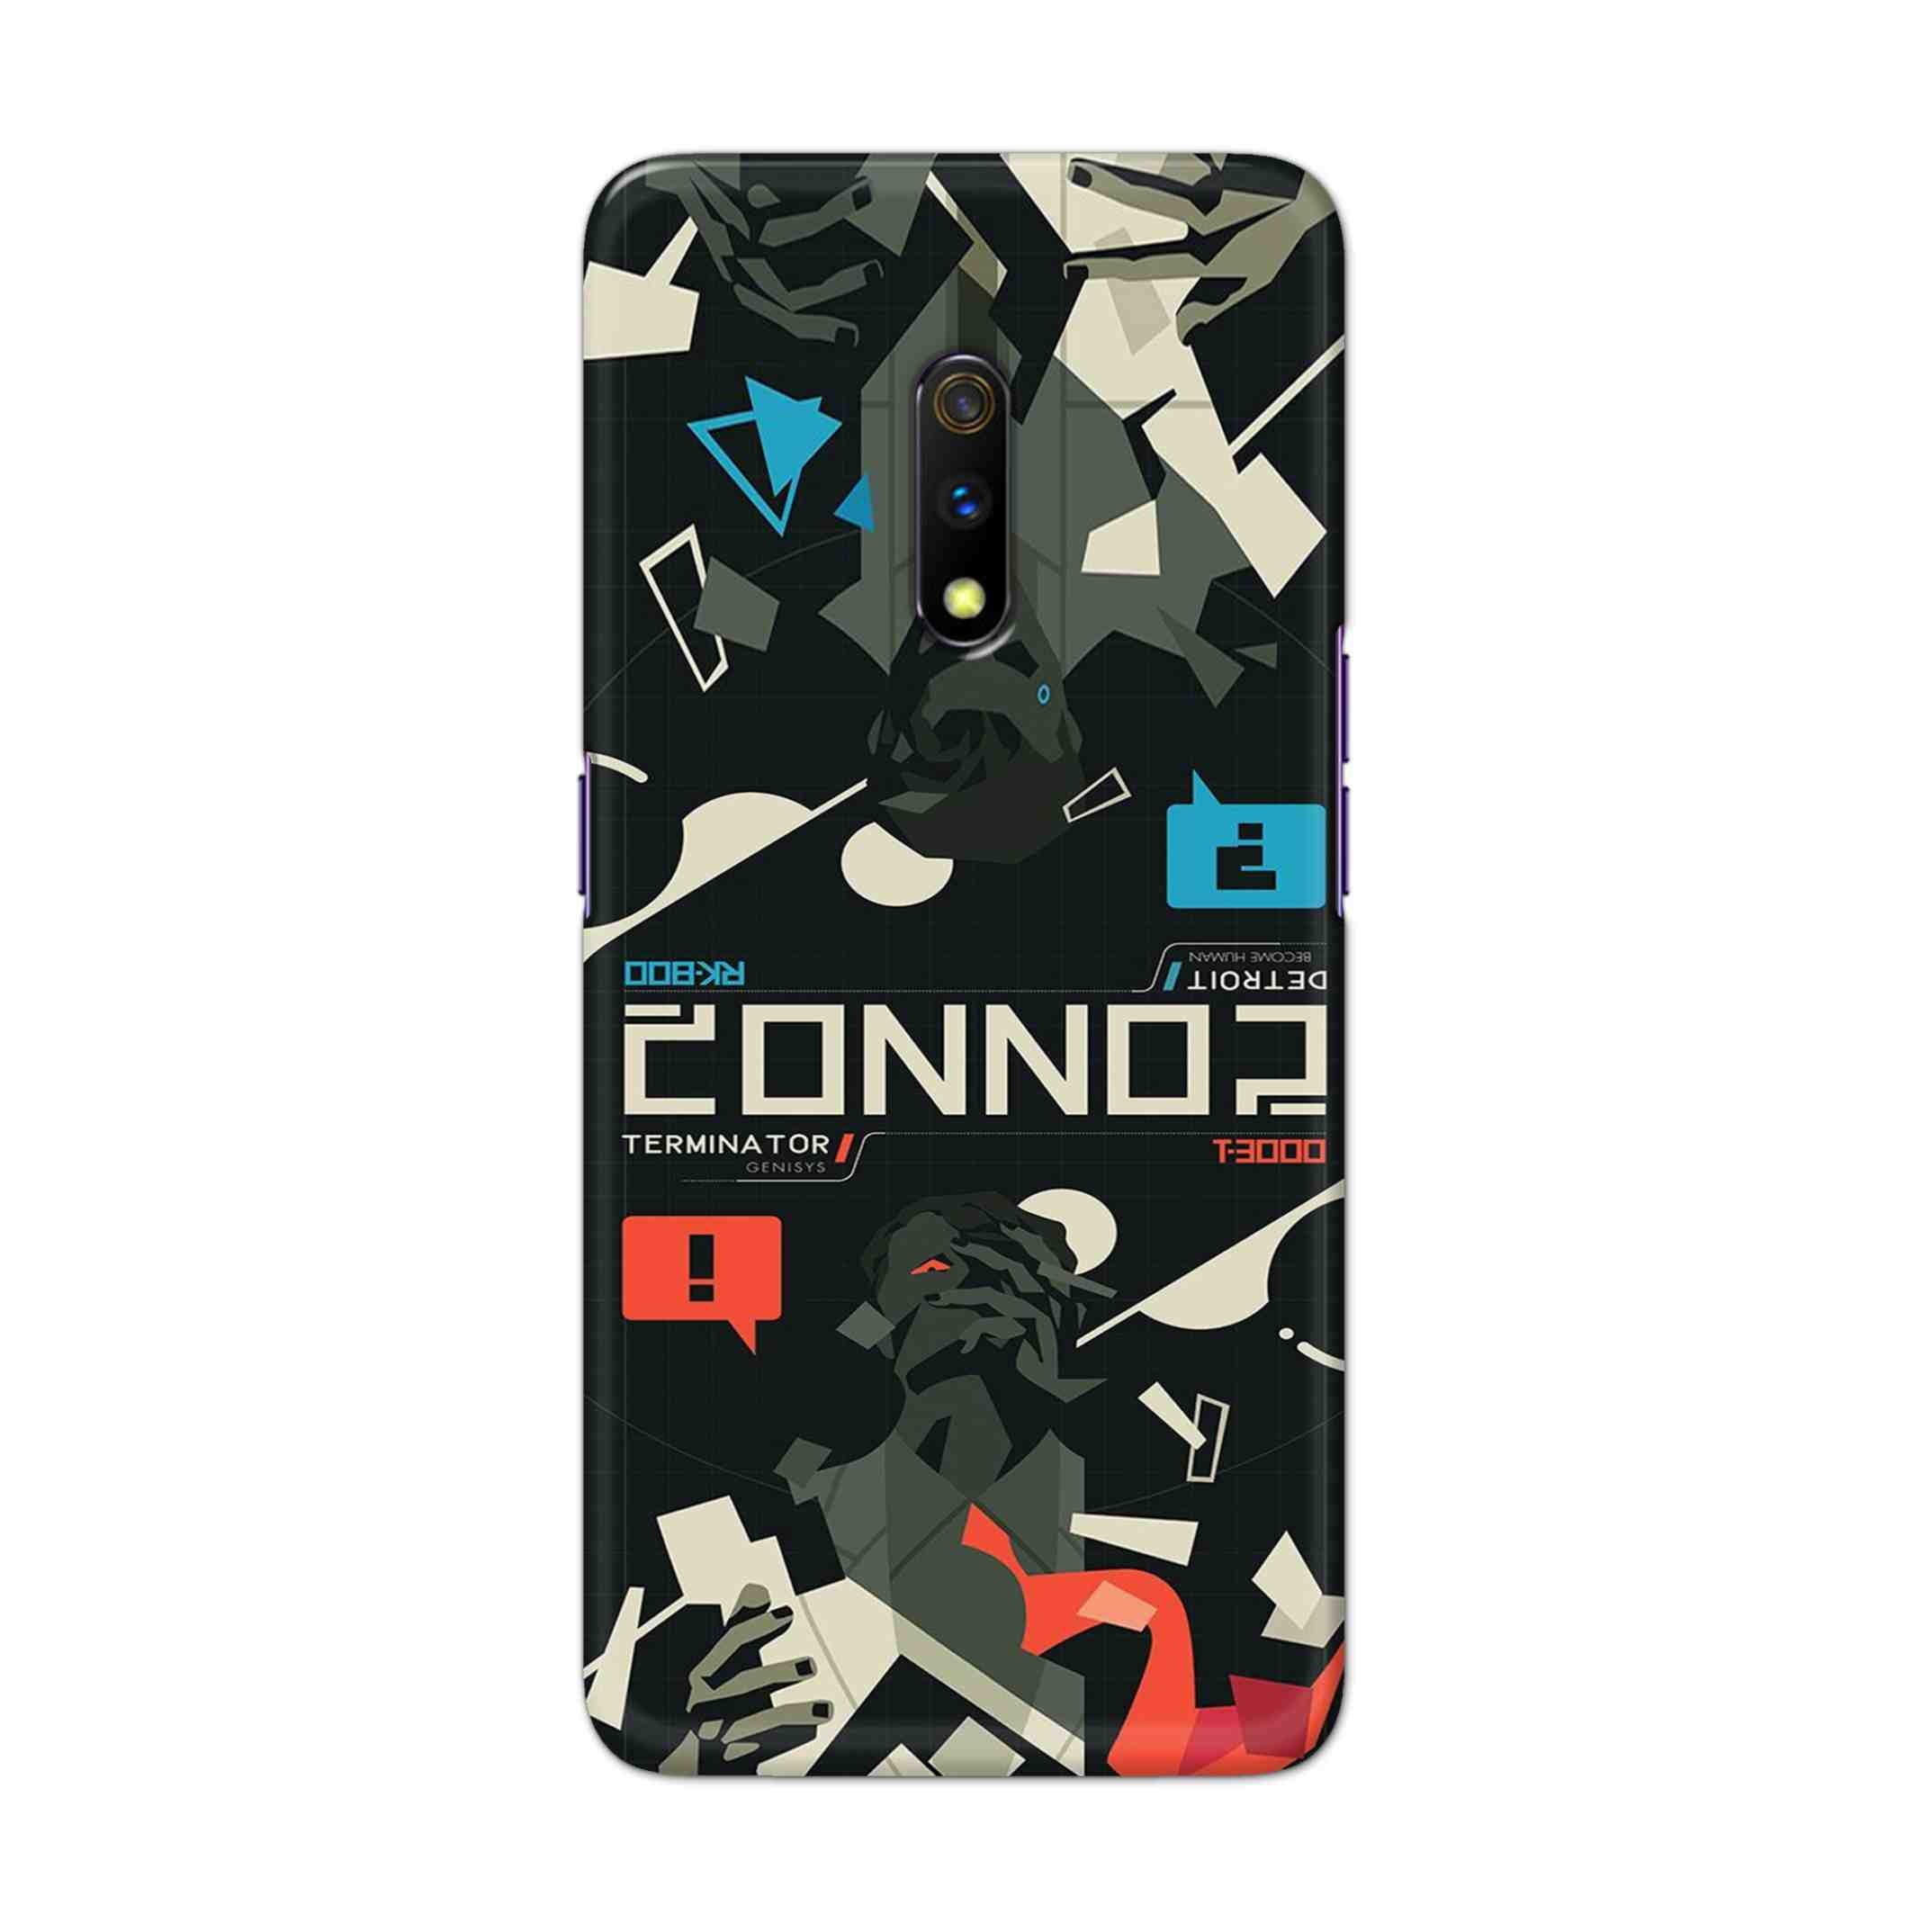 Buy Terminator Hard Back Mobile Phone Case Cover For Oppo Realme X Online